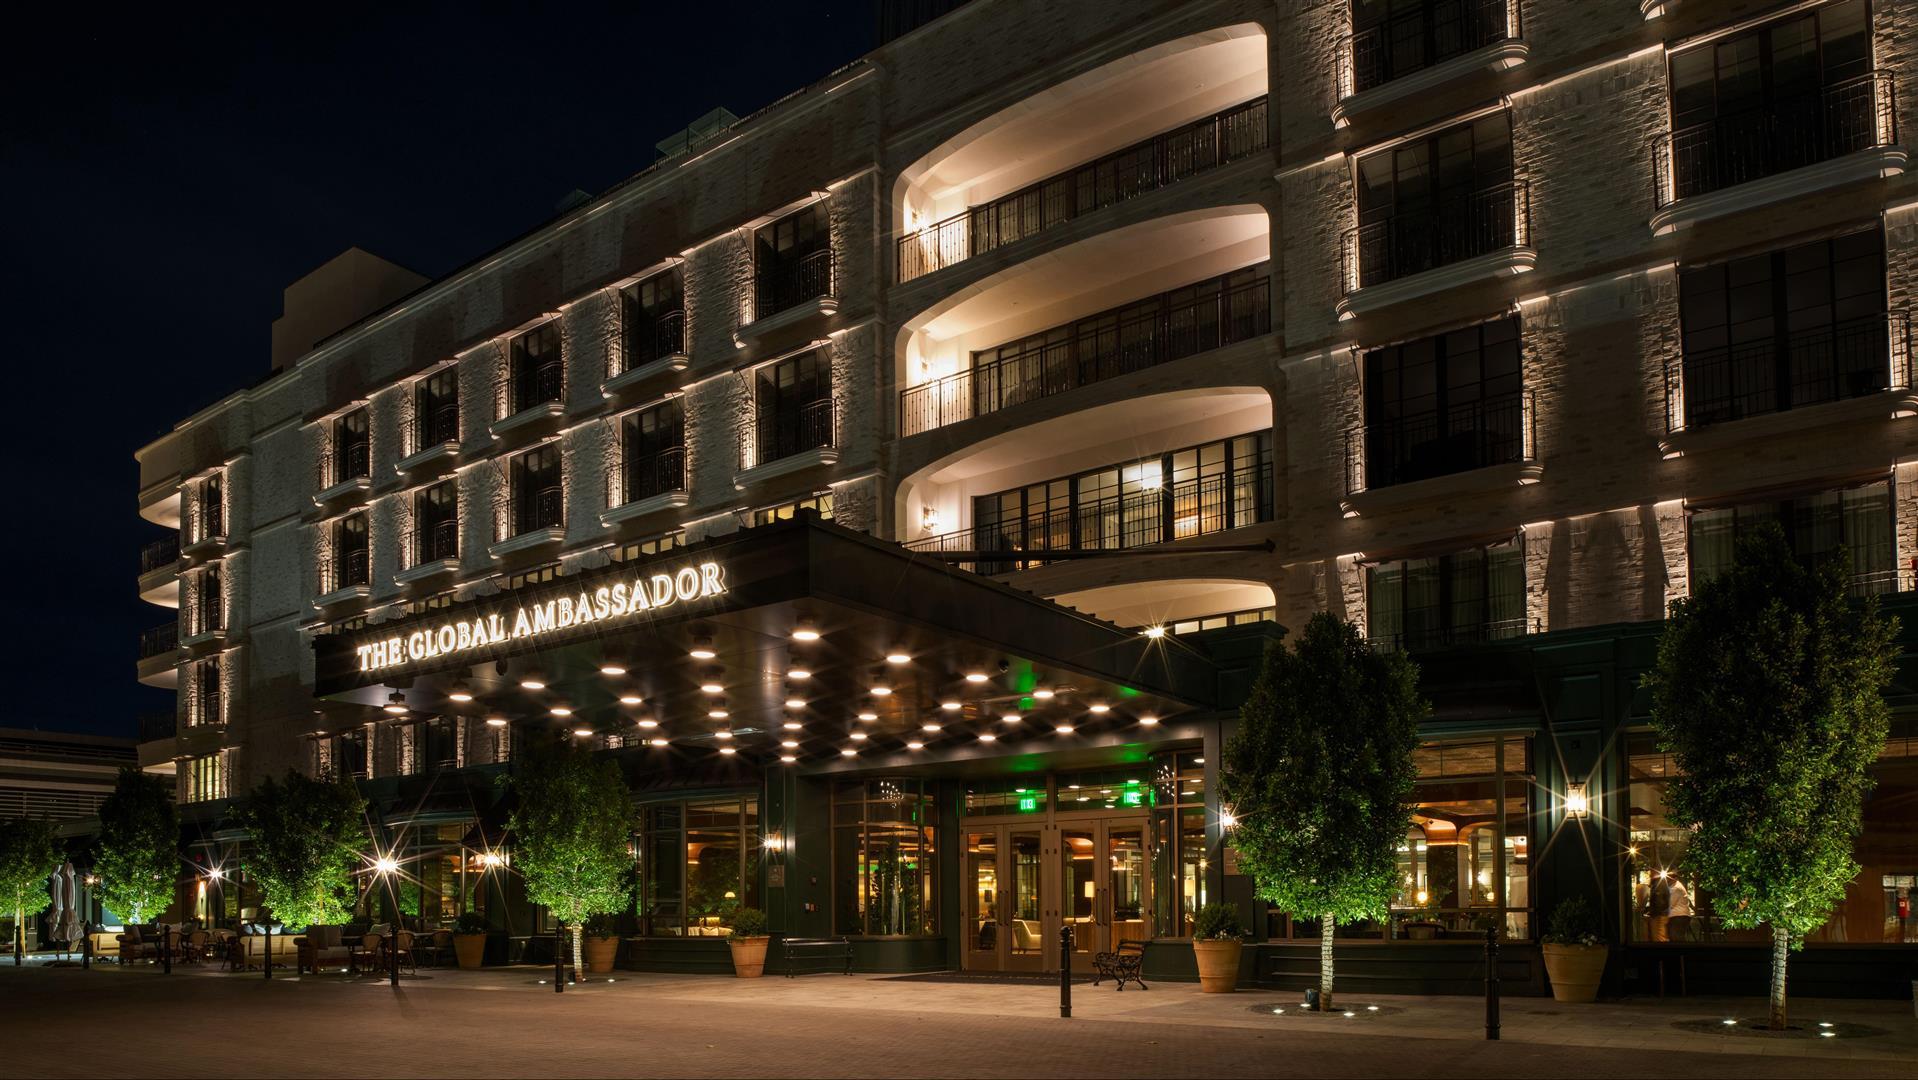 The Global Ambassador Hotel in Phoenix, AZ